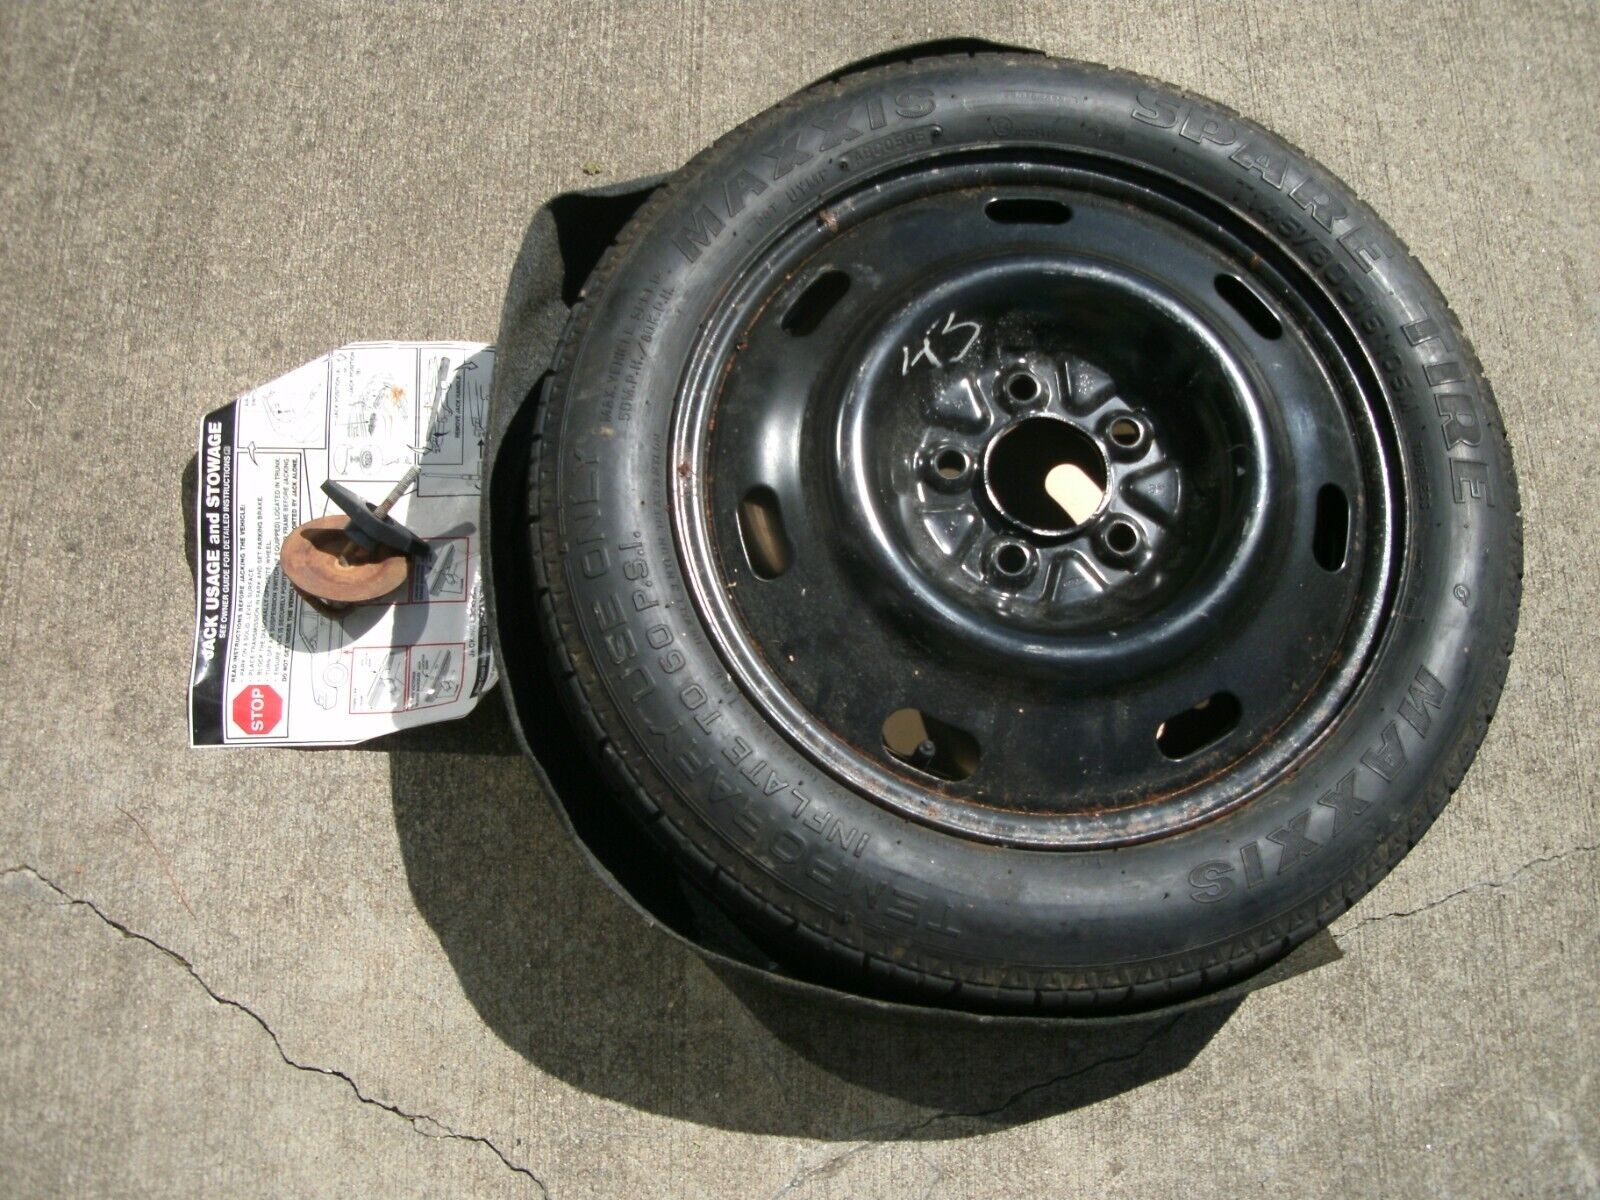 05 Mercury Grand Marquis spare wheel tire w/cover & hook